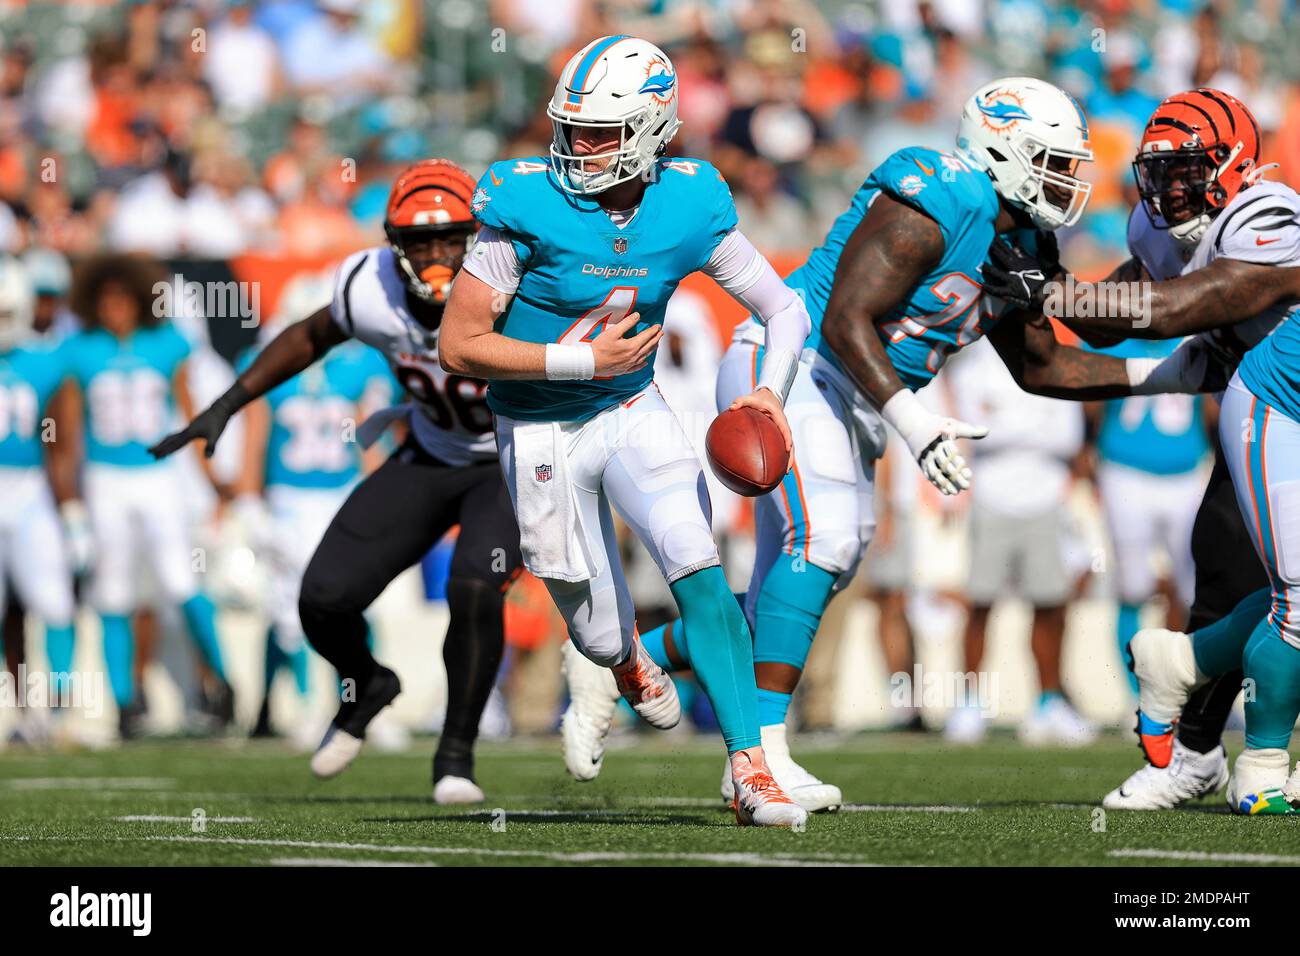 Miami Dolphins' quarterback Reid Sinnett (4) drops back against